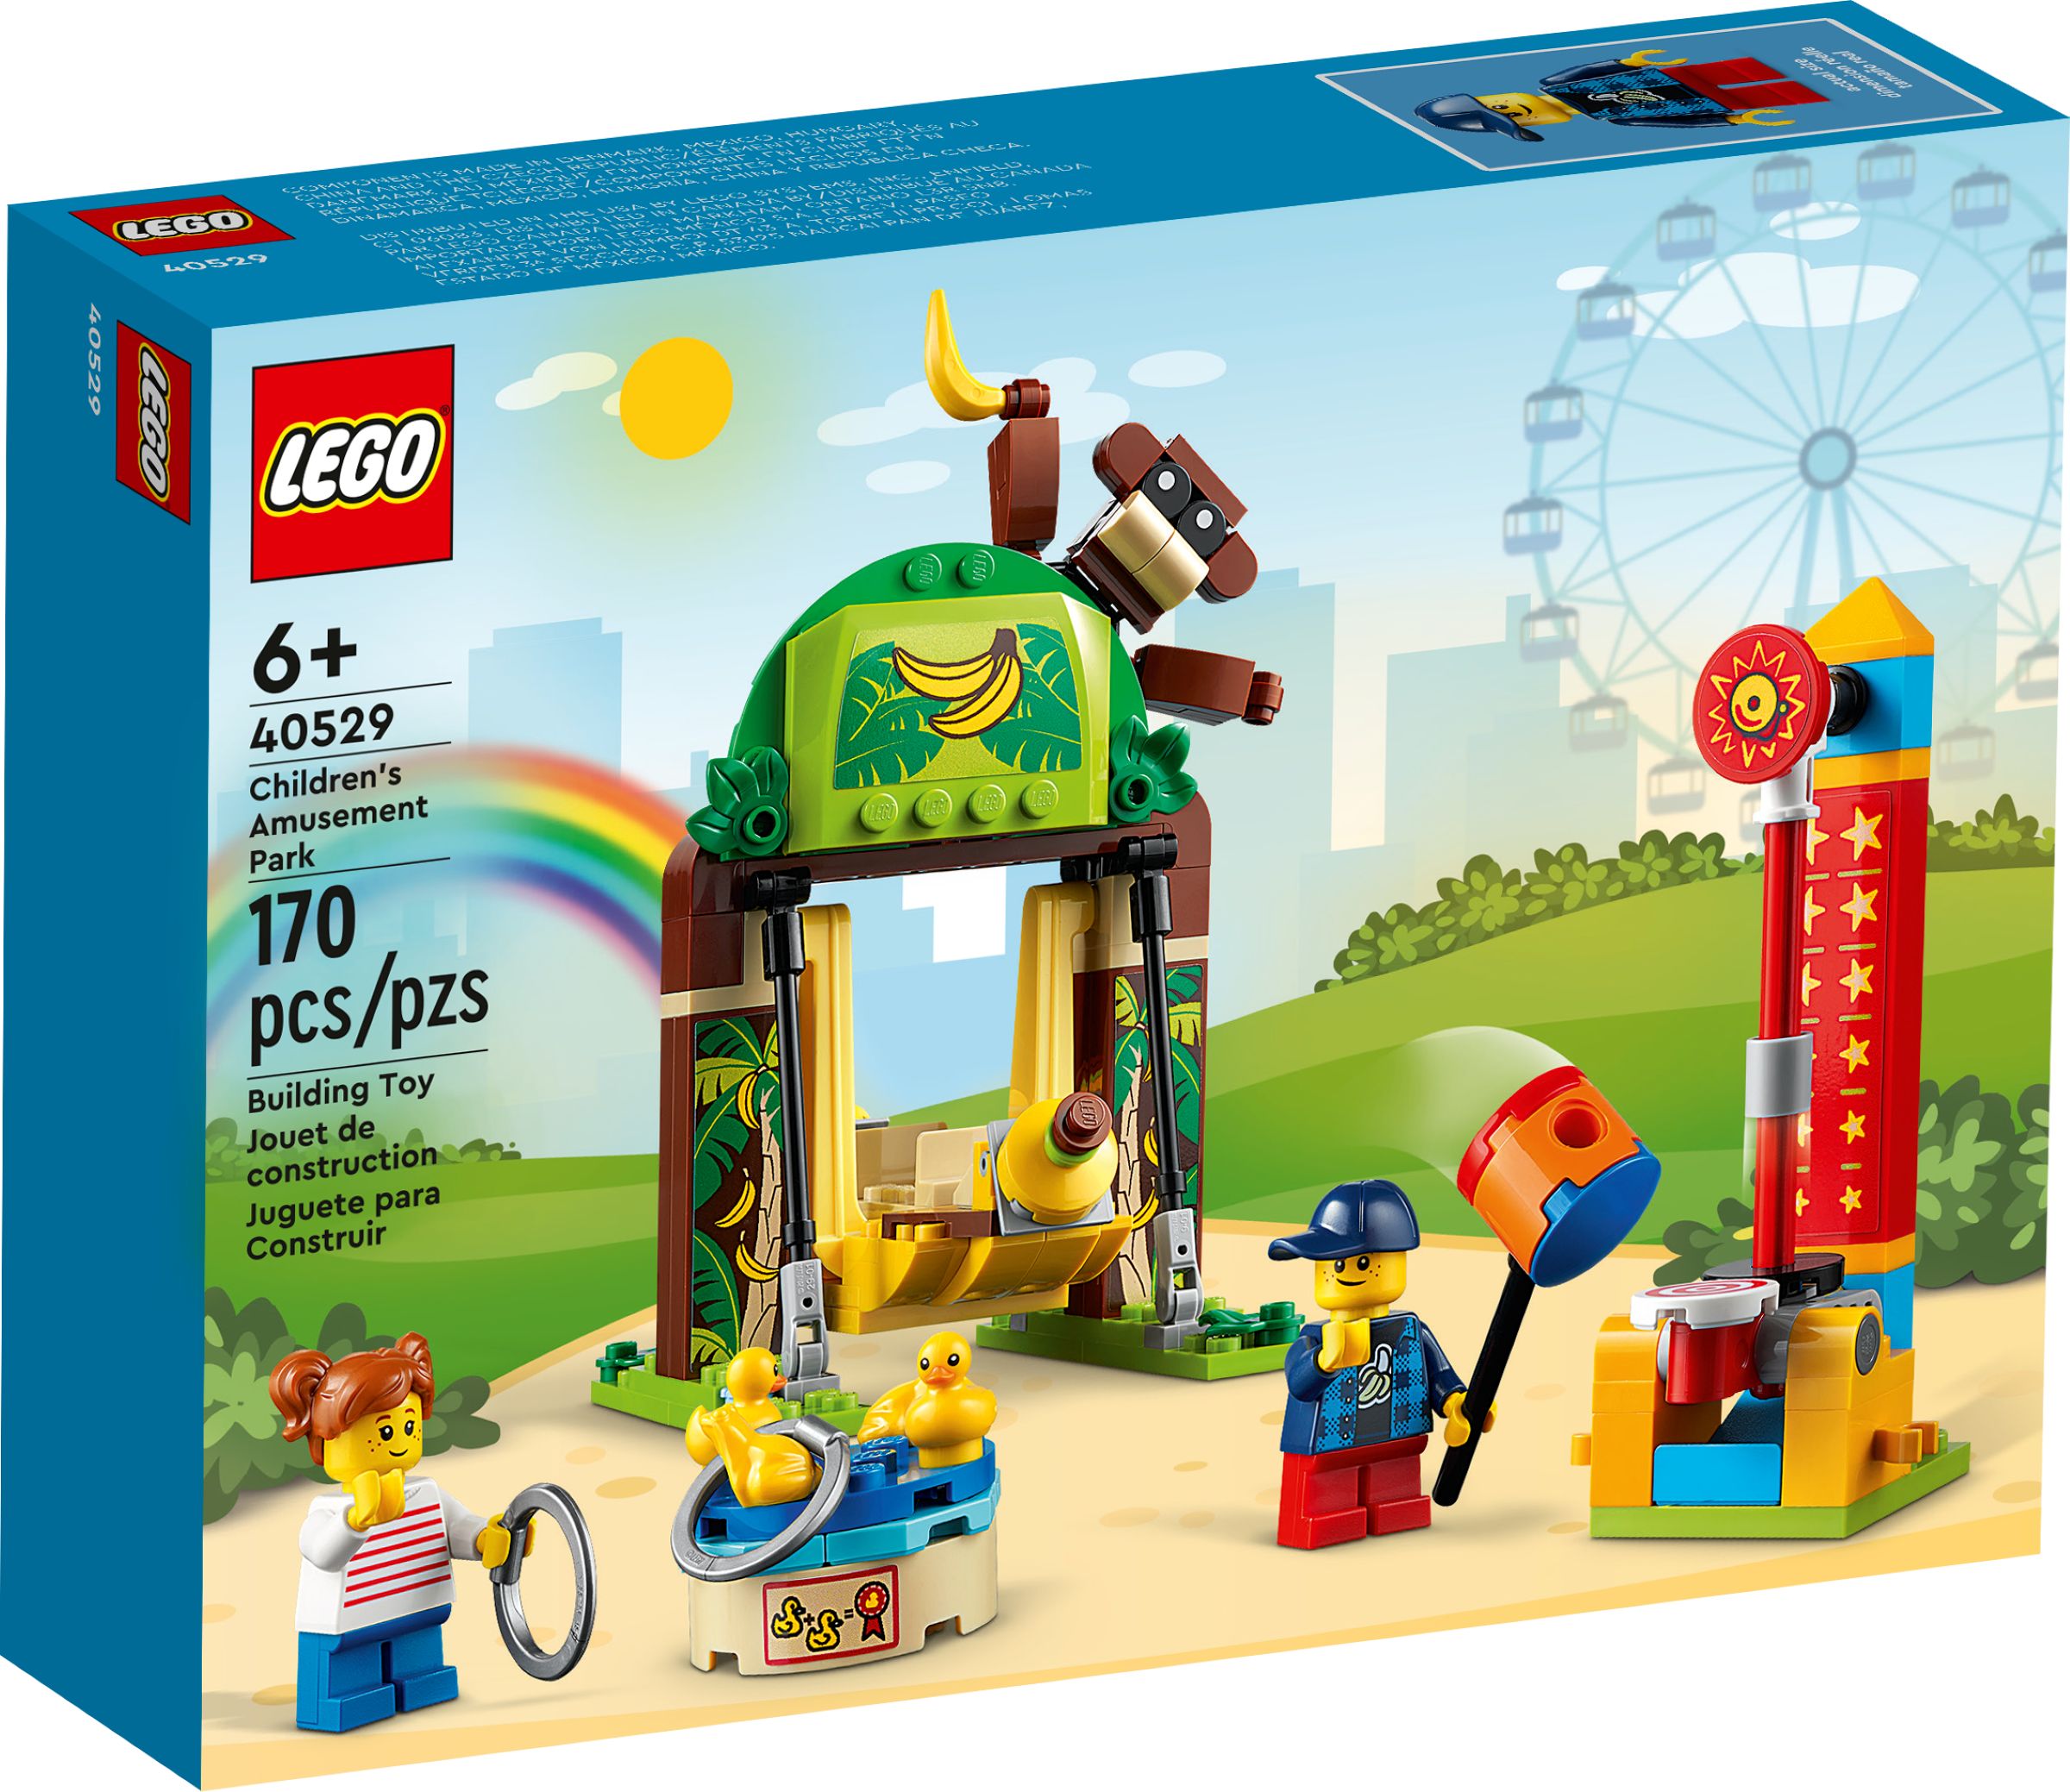 LEGO Miscellaneous 40529 Kinder-Erlebnispark LEGO_40529_alt1.jpg